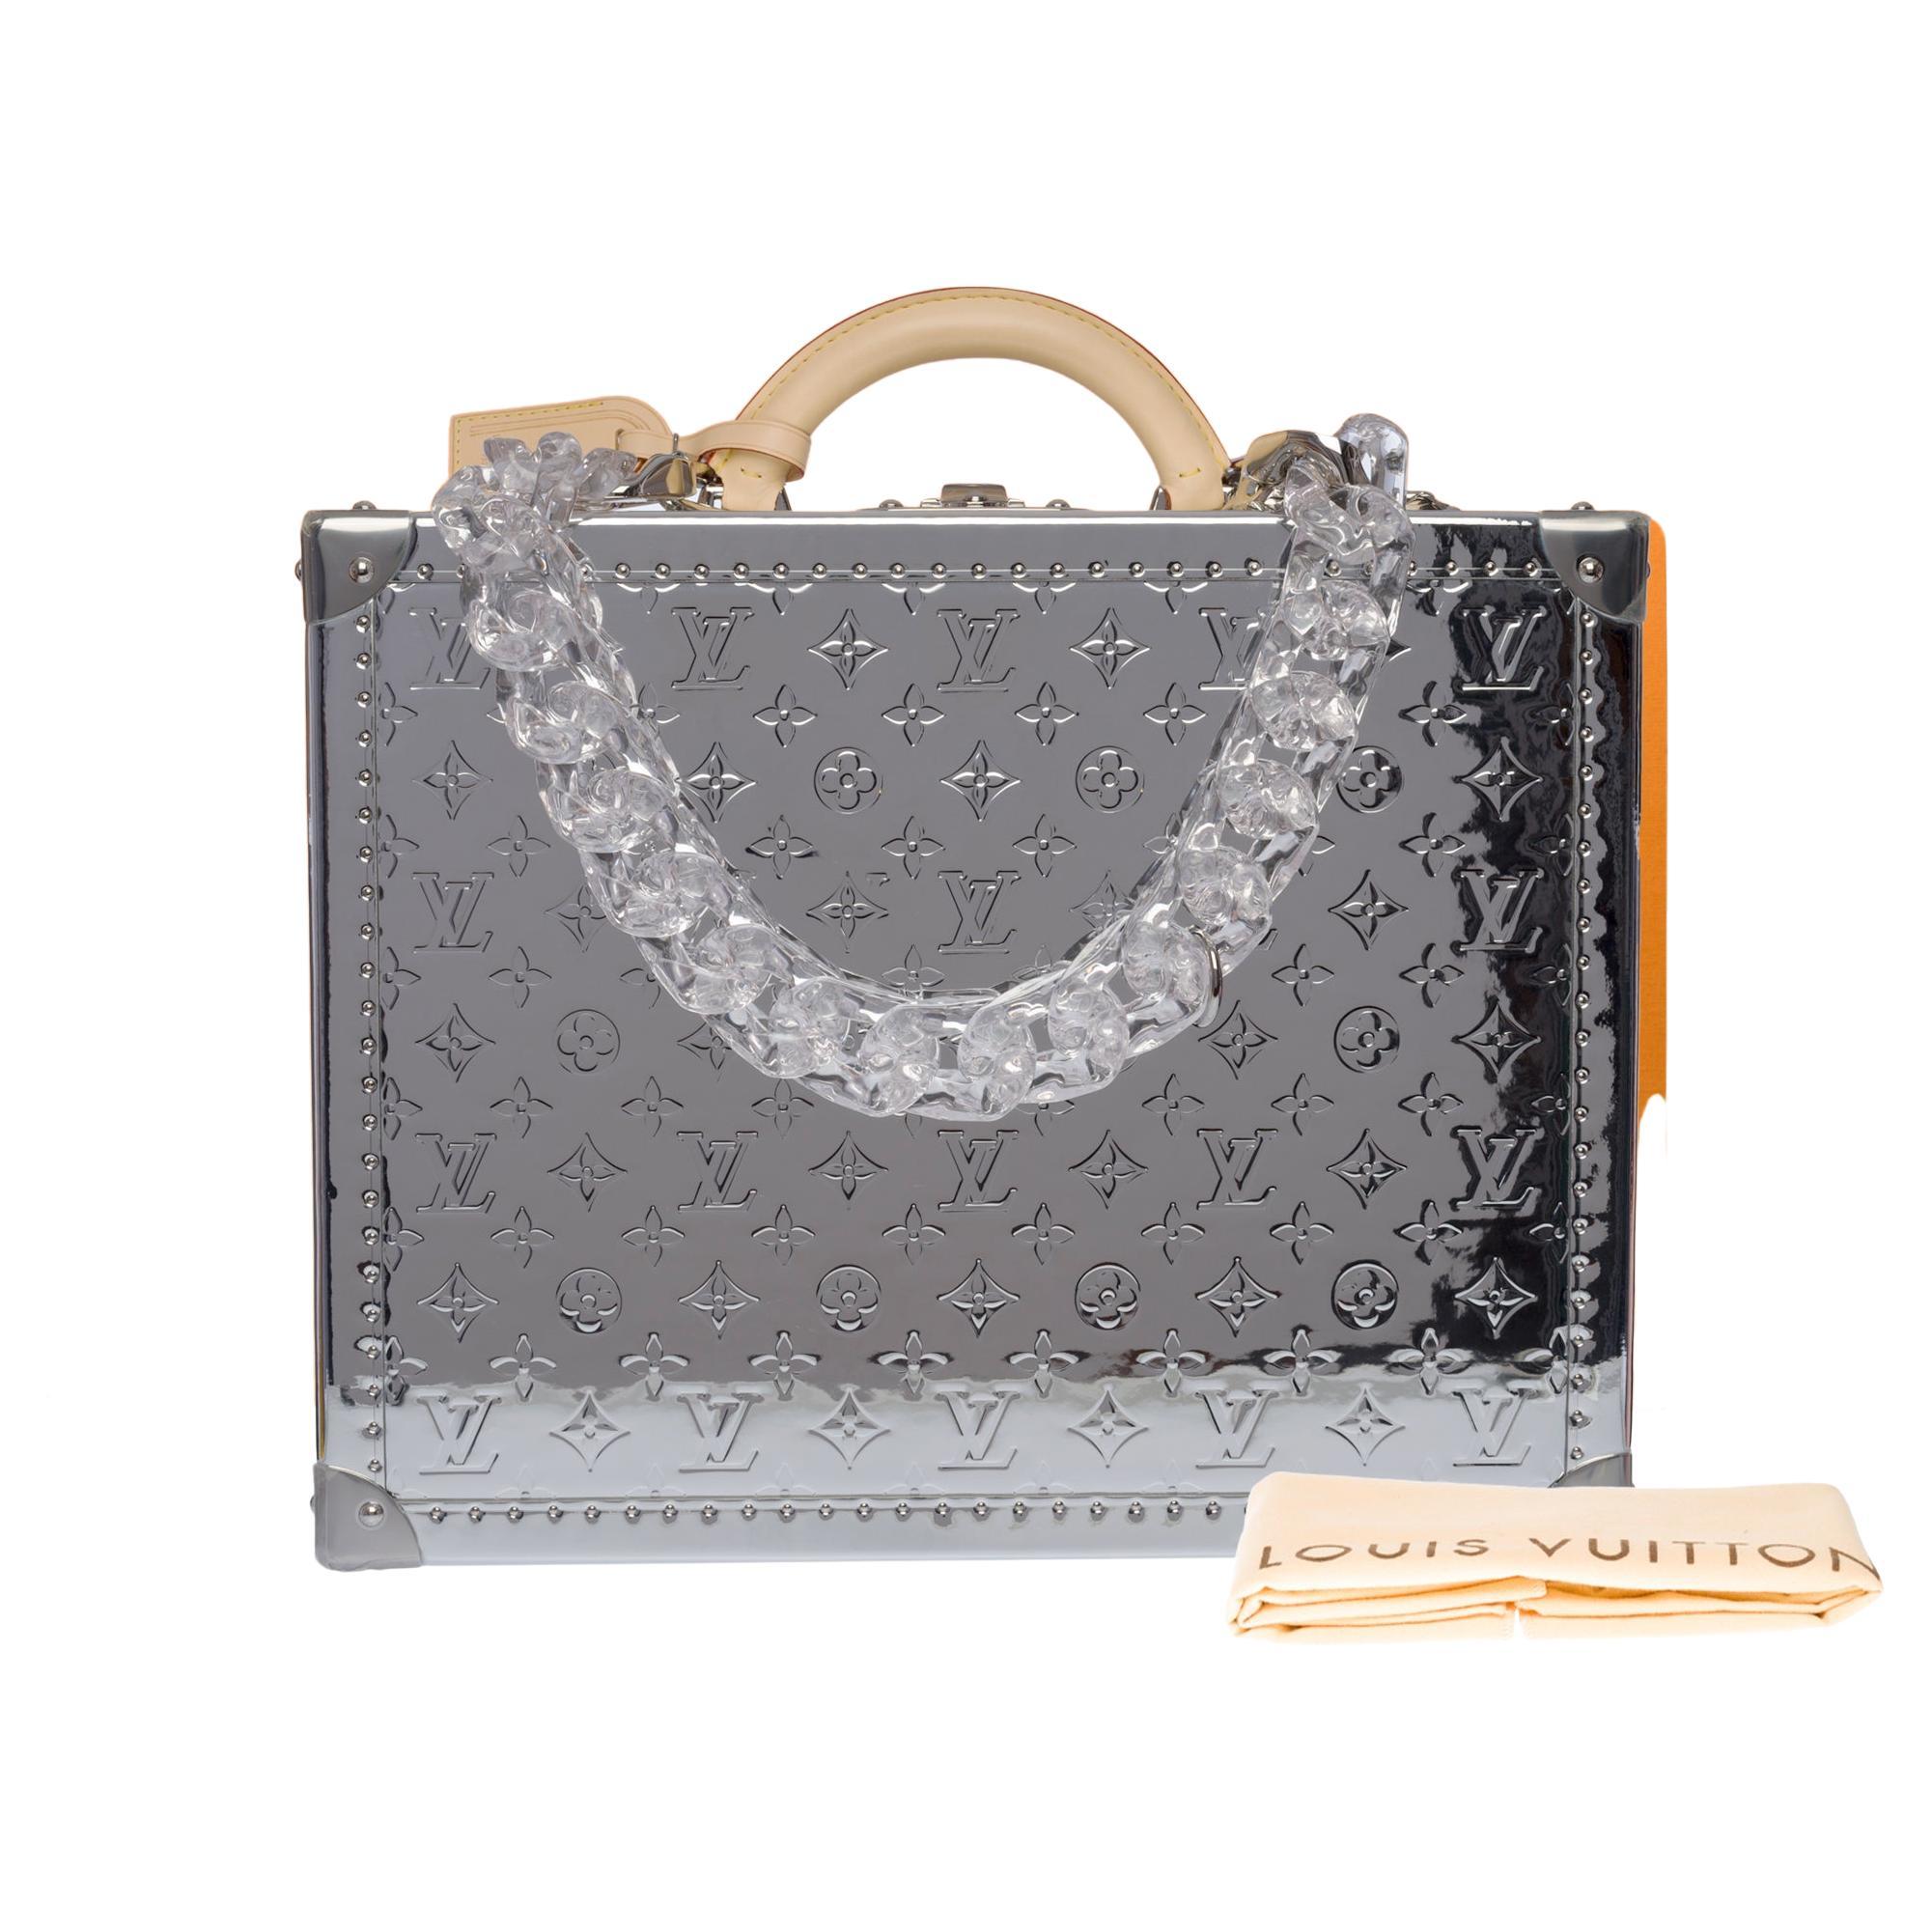 Louis Vuitton Crossbody Bag Price - Arad Branding